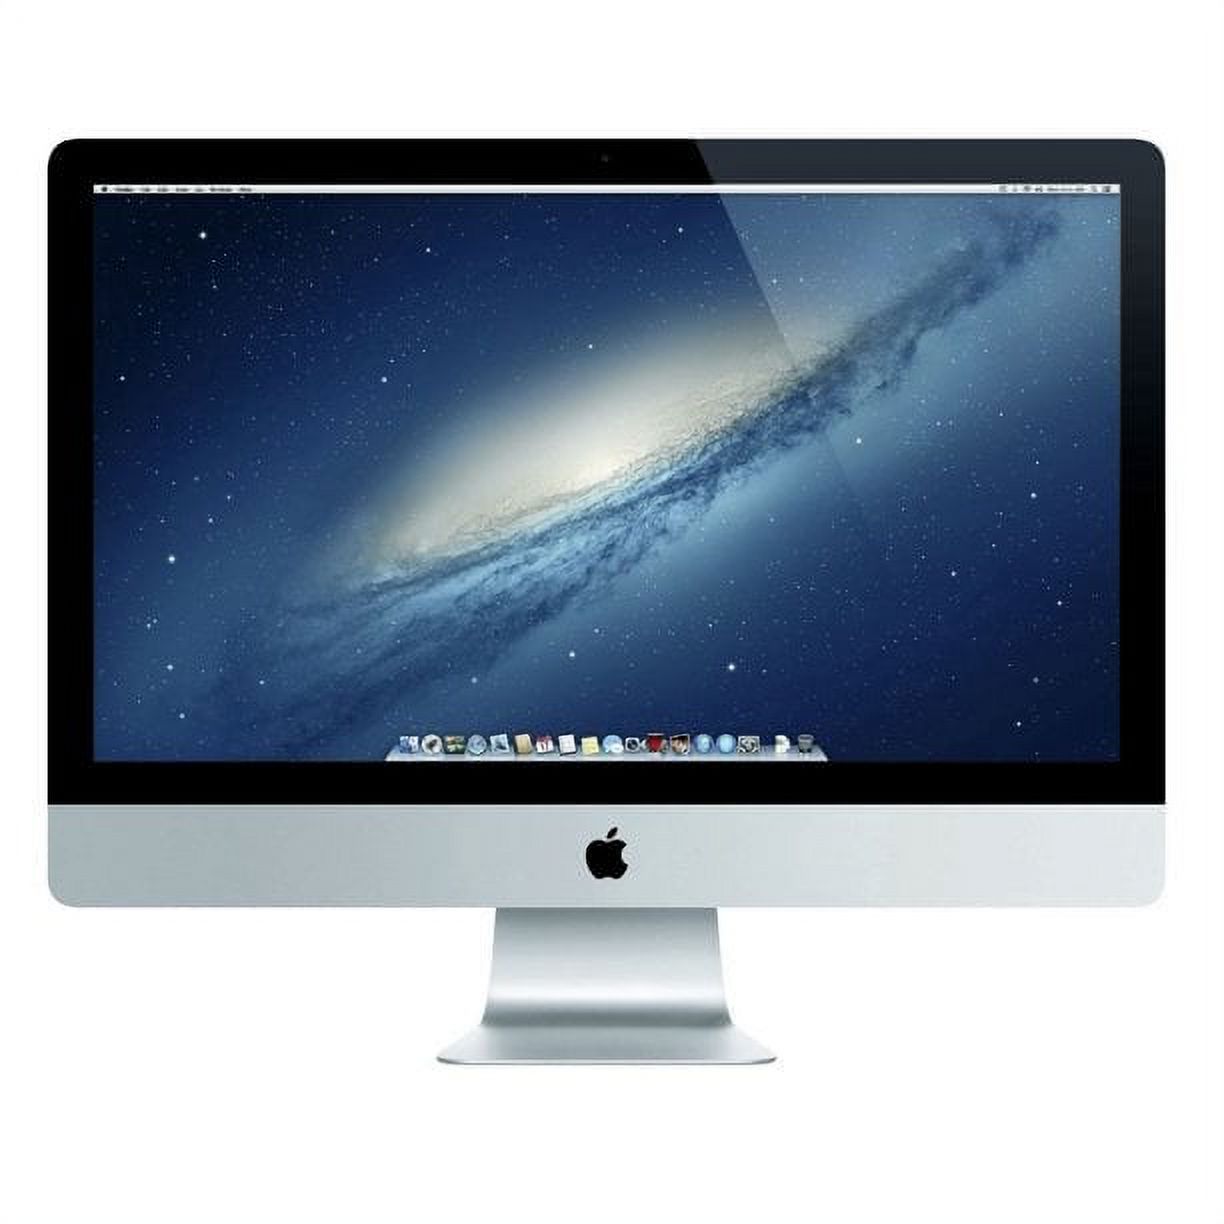 Restored Apple iMac 21.5" FHD All-in-One Computer, Intel Core i5, 8GB RAM, 1TB HD, Mac OS, Silver, ME086LL/A (Refurbished) - image 1 of 5